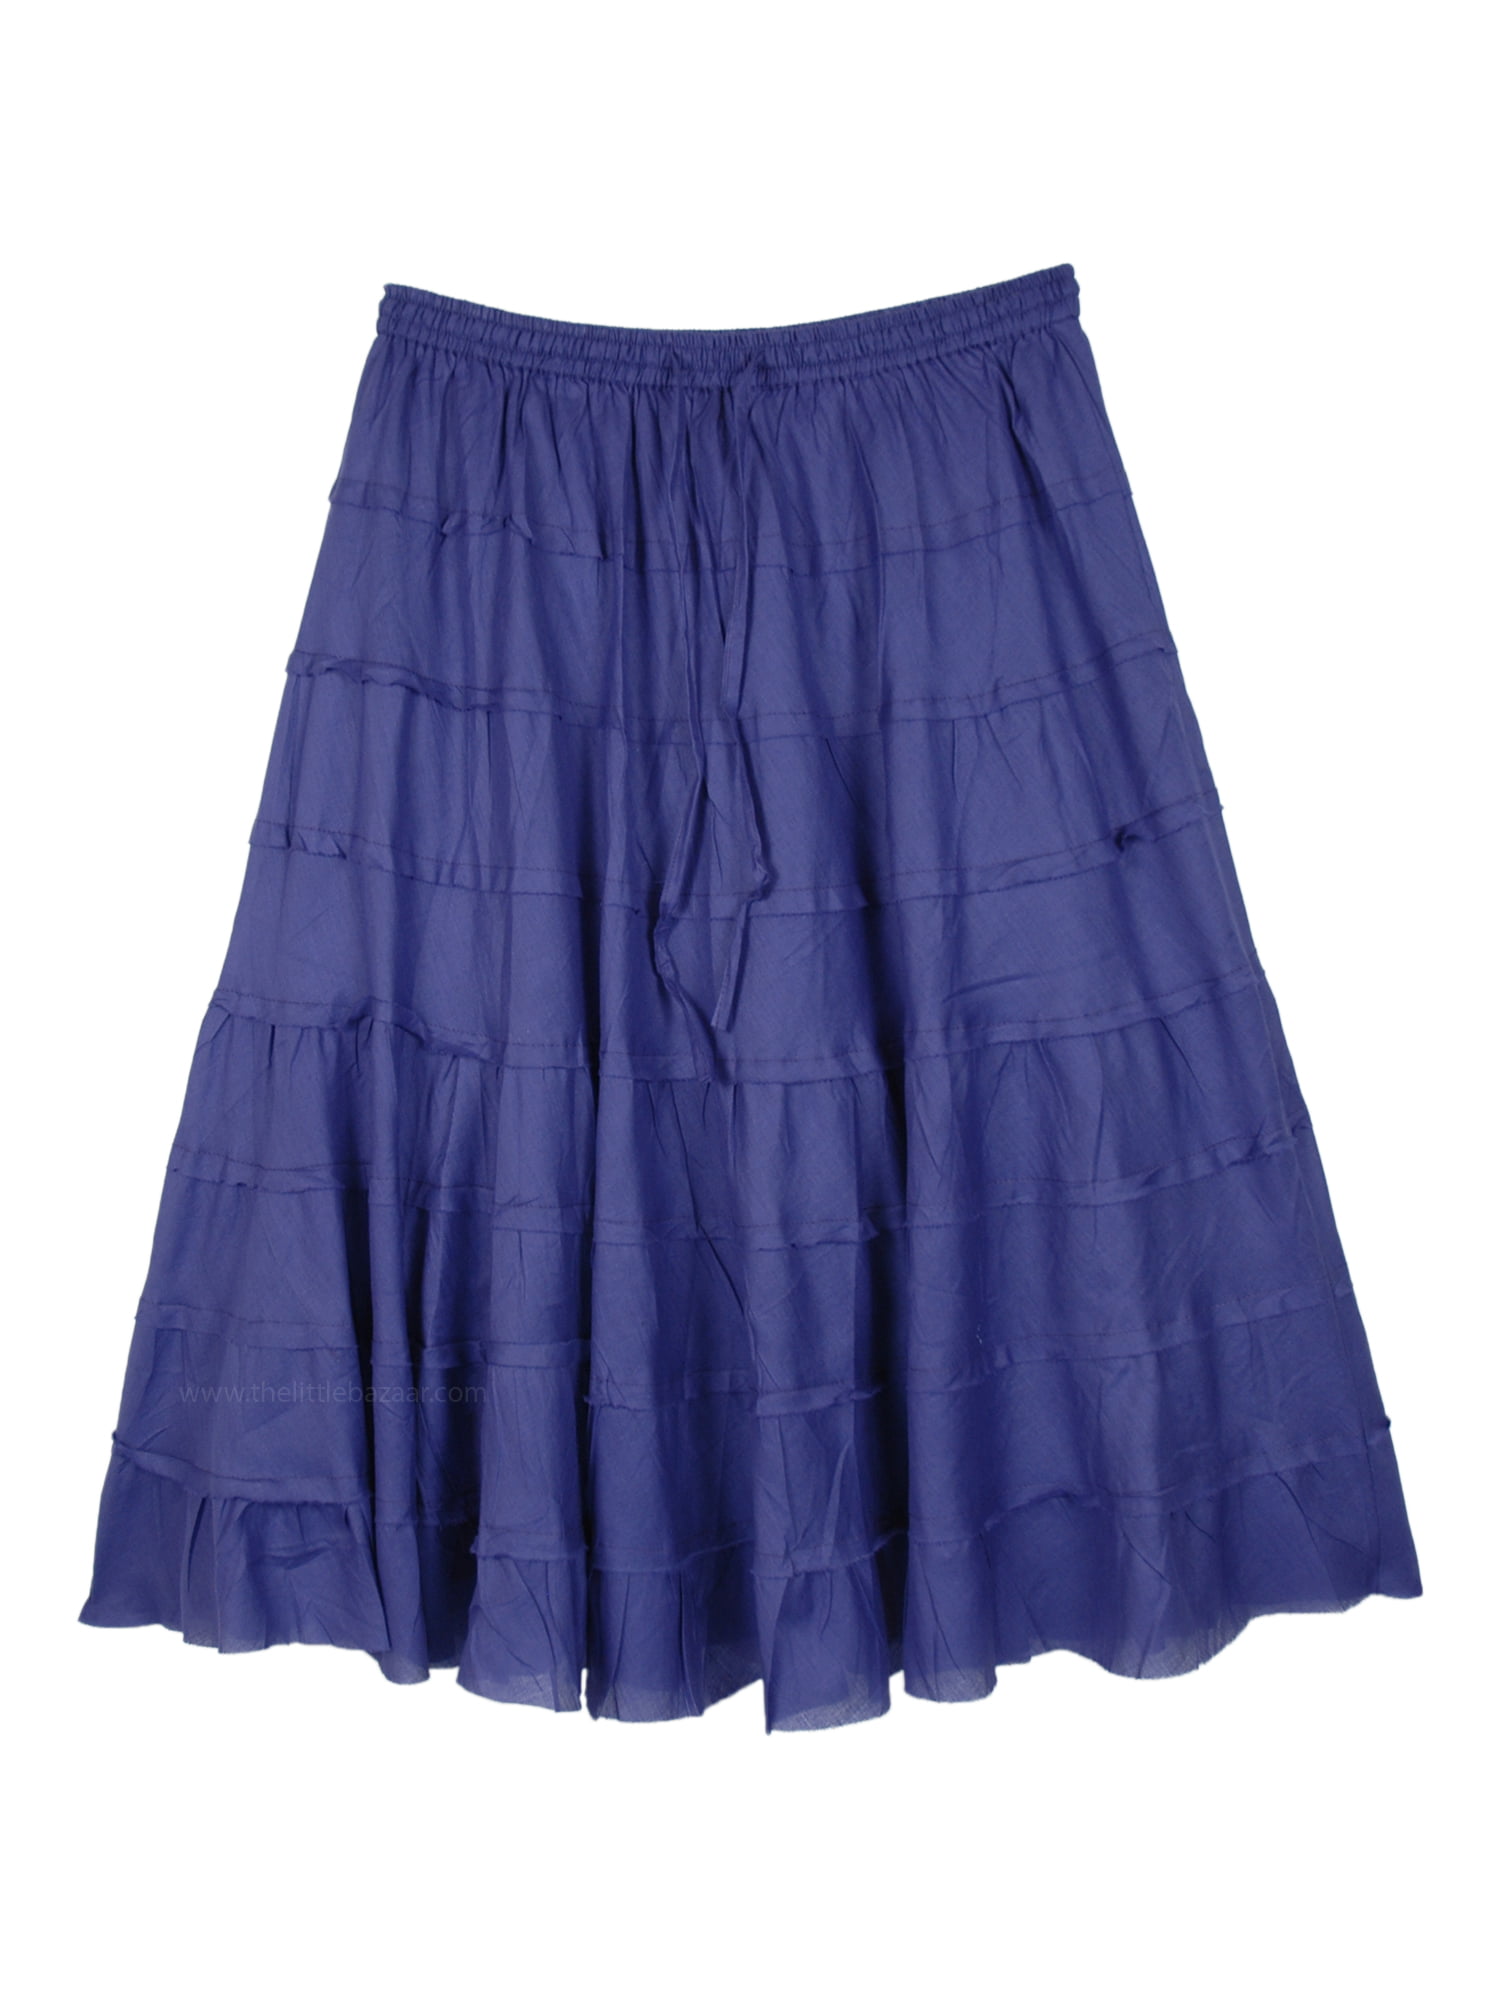 Knee Length Midnight Blue Tiered Short Summer Cotton Skirt - Walmart.com